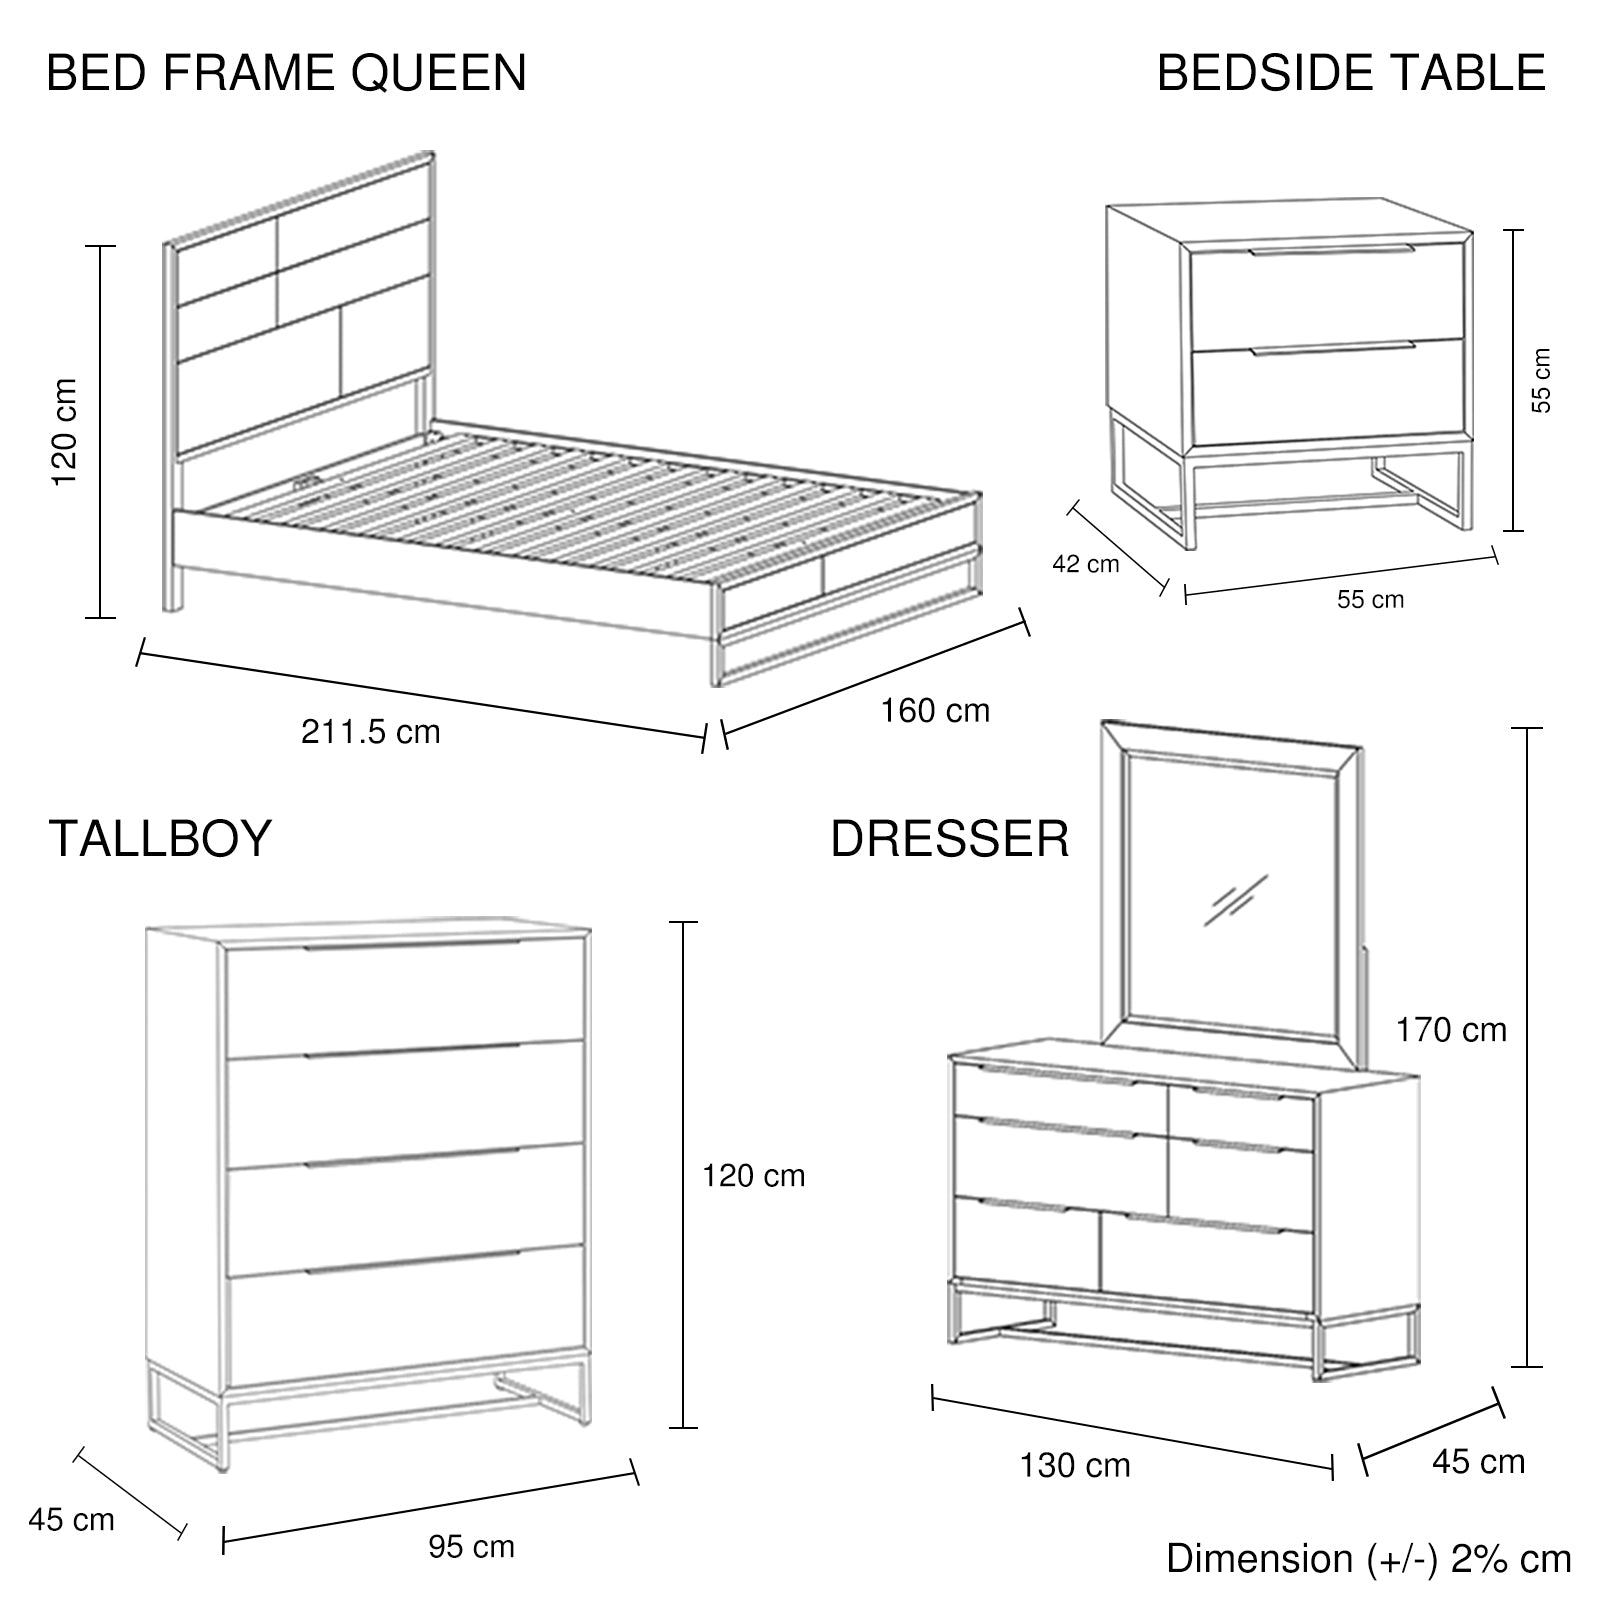 5 Pieces Queen Size Bedroom Suite made in Solid Wood